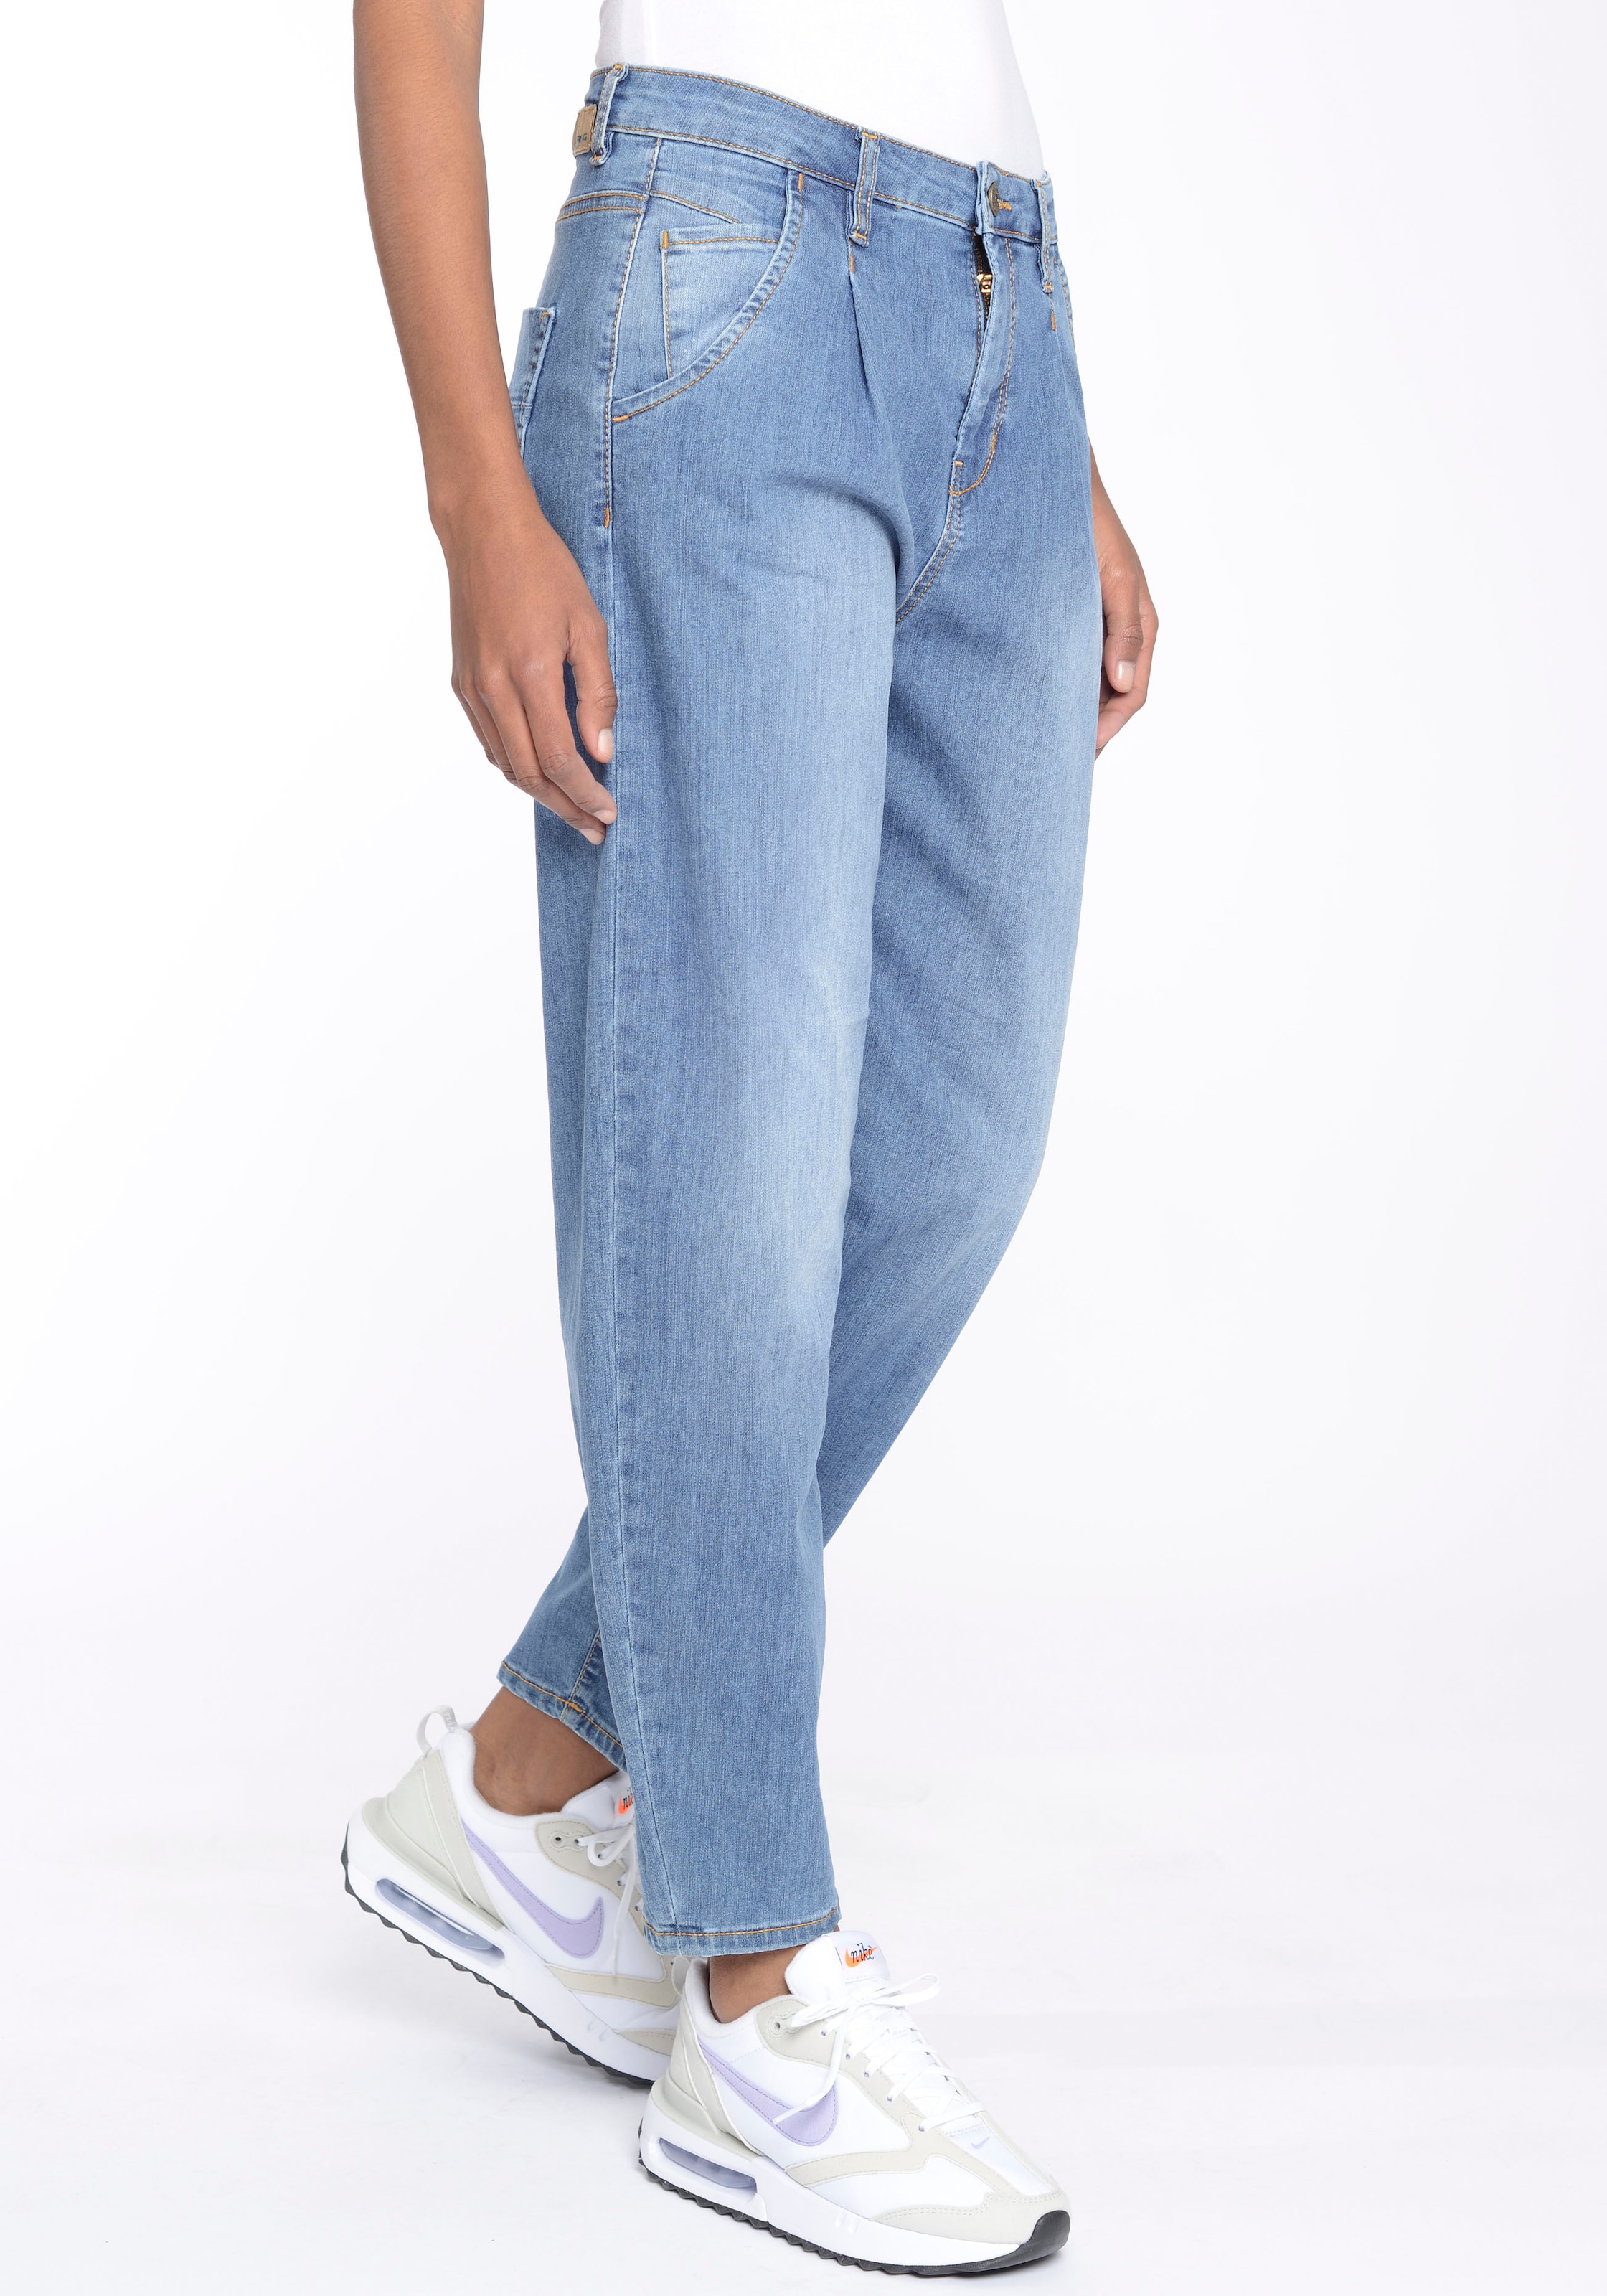 ♕ GANG Bequeme Jeans »94SILVIA«, Ballon Fit in cooler Used Waschung  versandkostenfrei kaufen